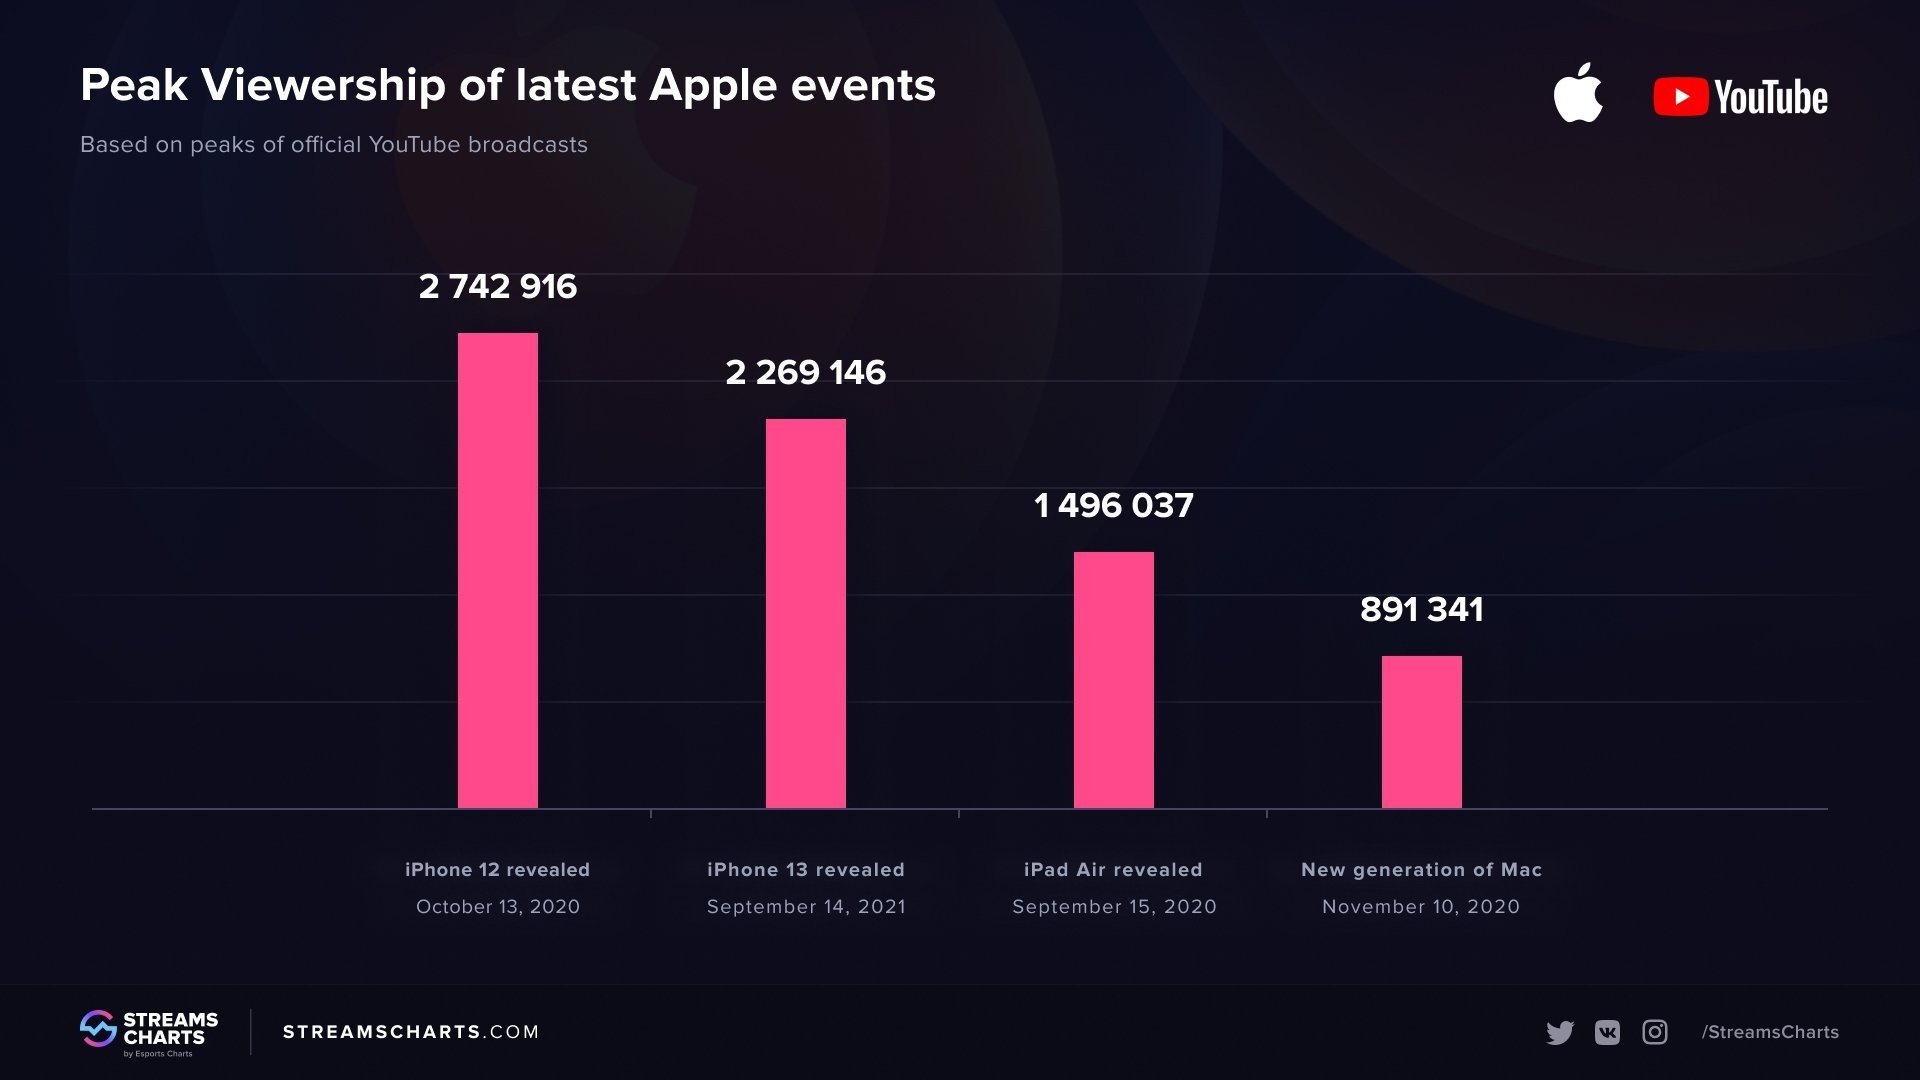 iPhone 12 ждали больше презентация iPhone 13 собрала на 500 тысяч зрителей меньше